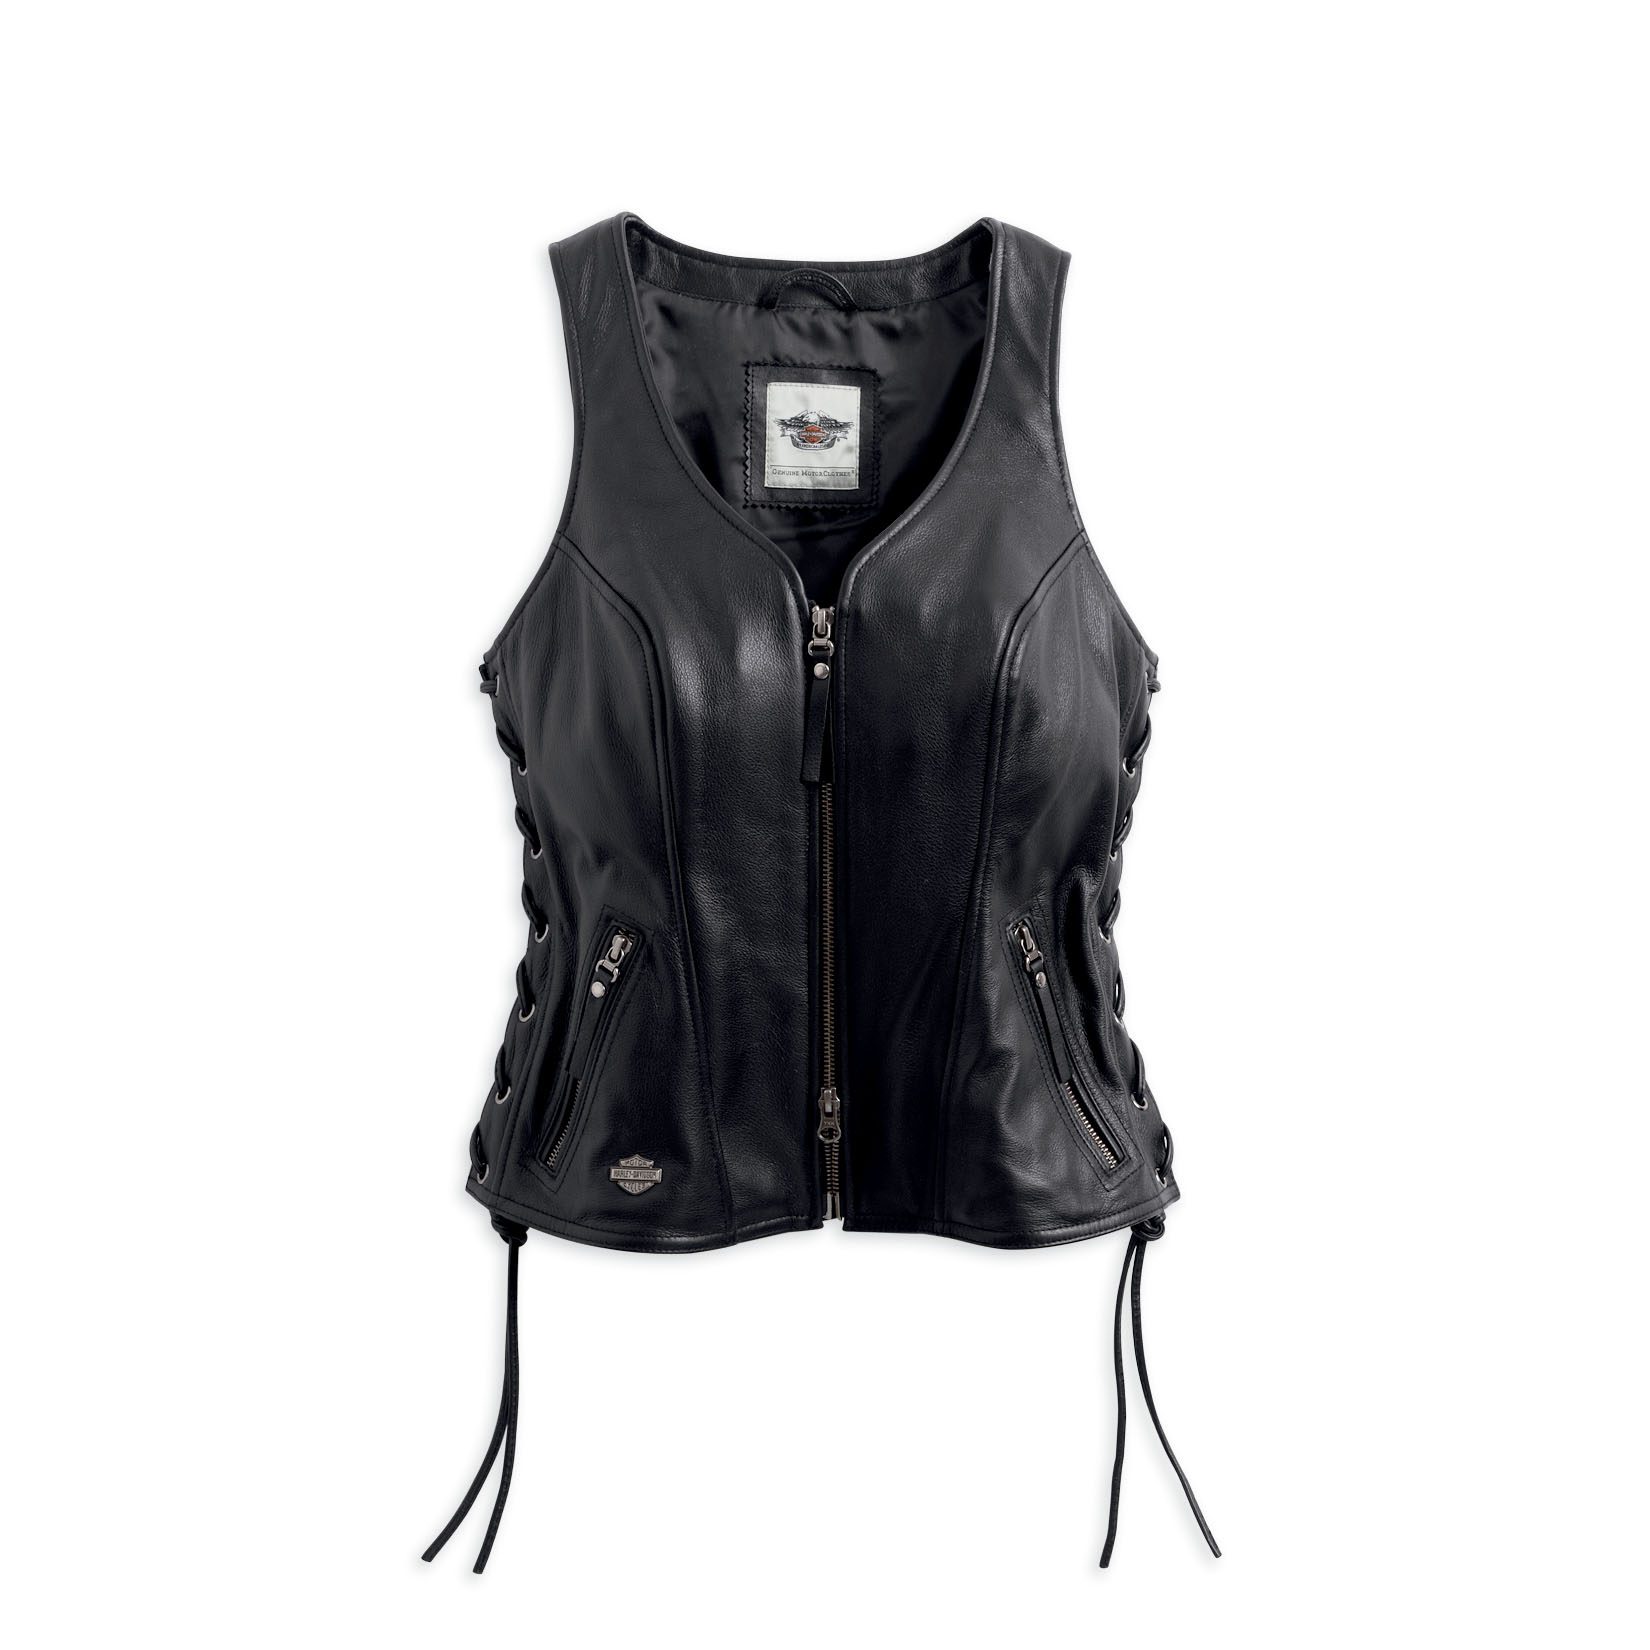 Chaleco mujer Avenue Leather Vest - Harley Davidson